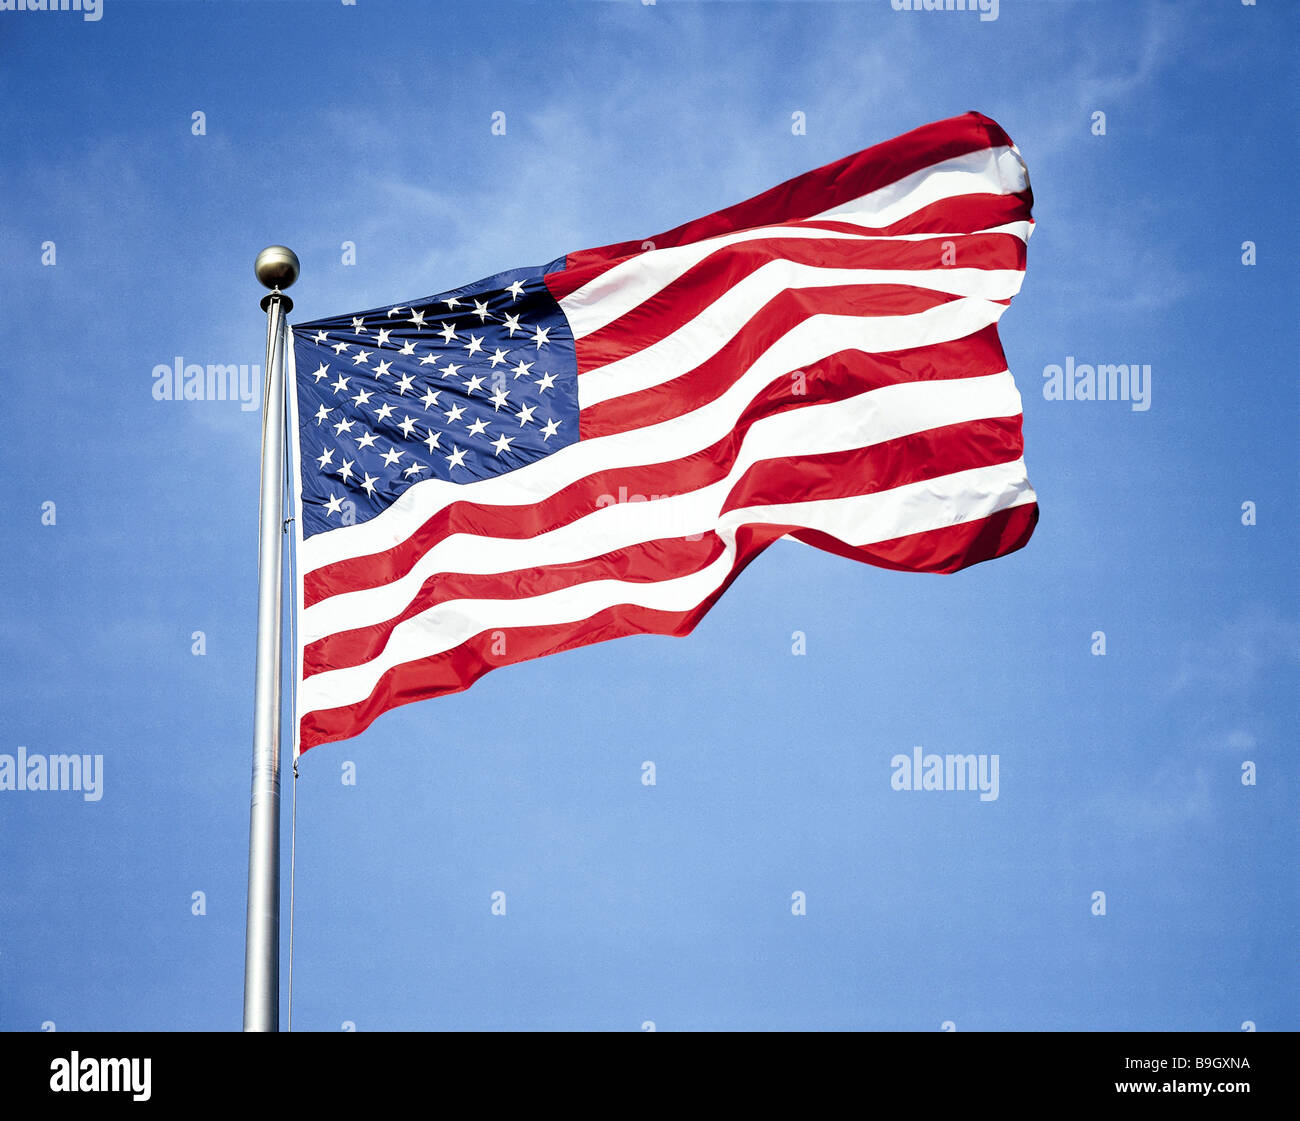 Flagge amerika -Fotos und -Bildmaterial in hoher Auflösung – Alamy